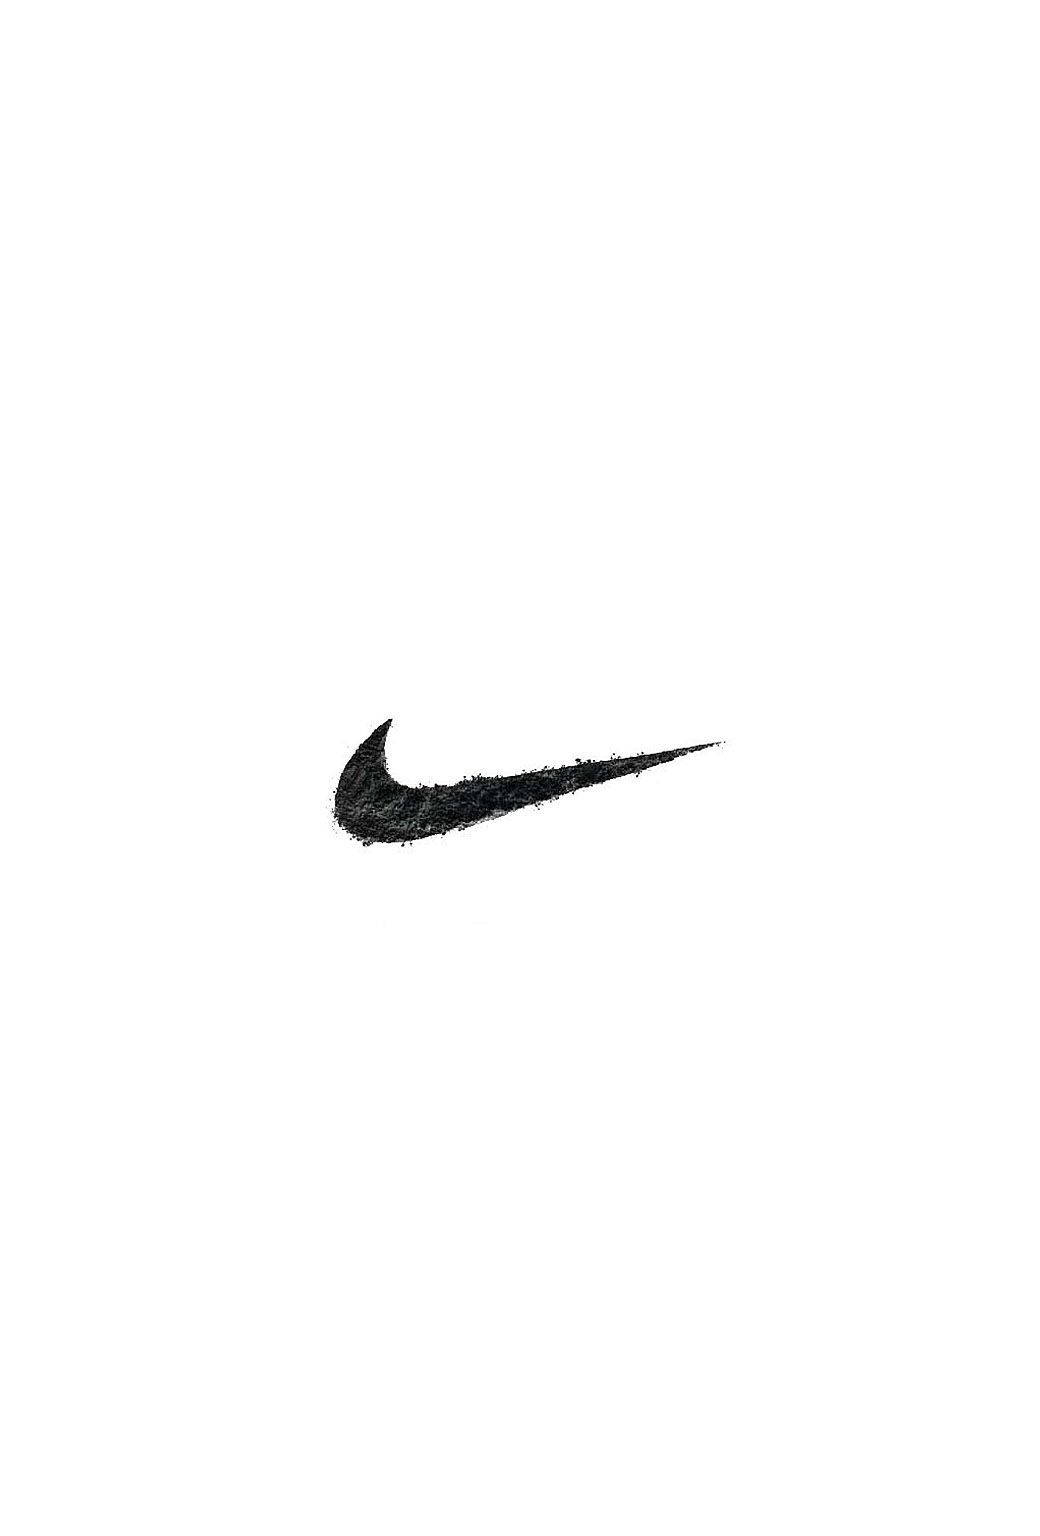 White With Nike Logo Iphone Background